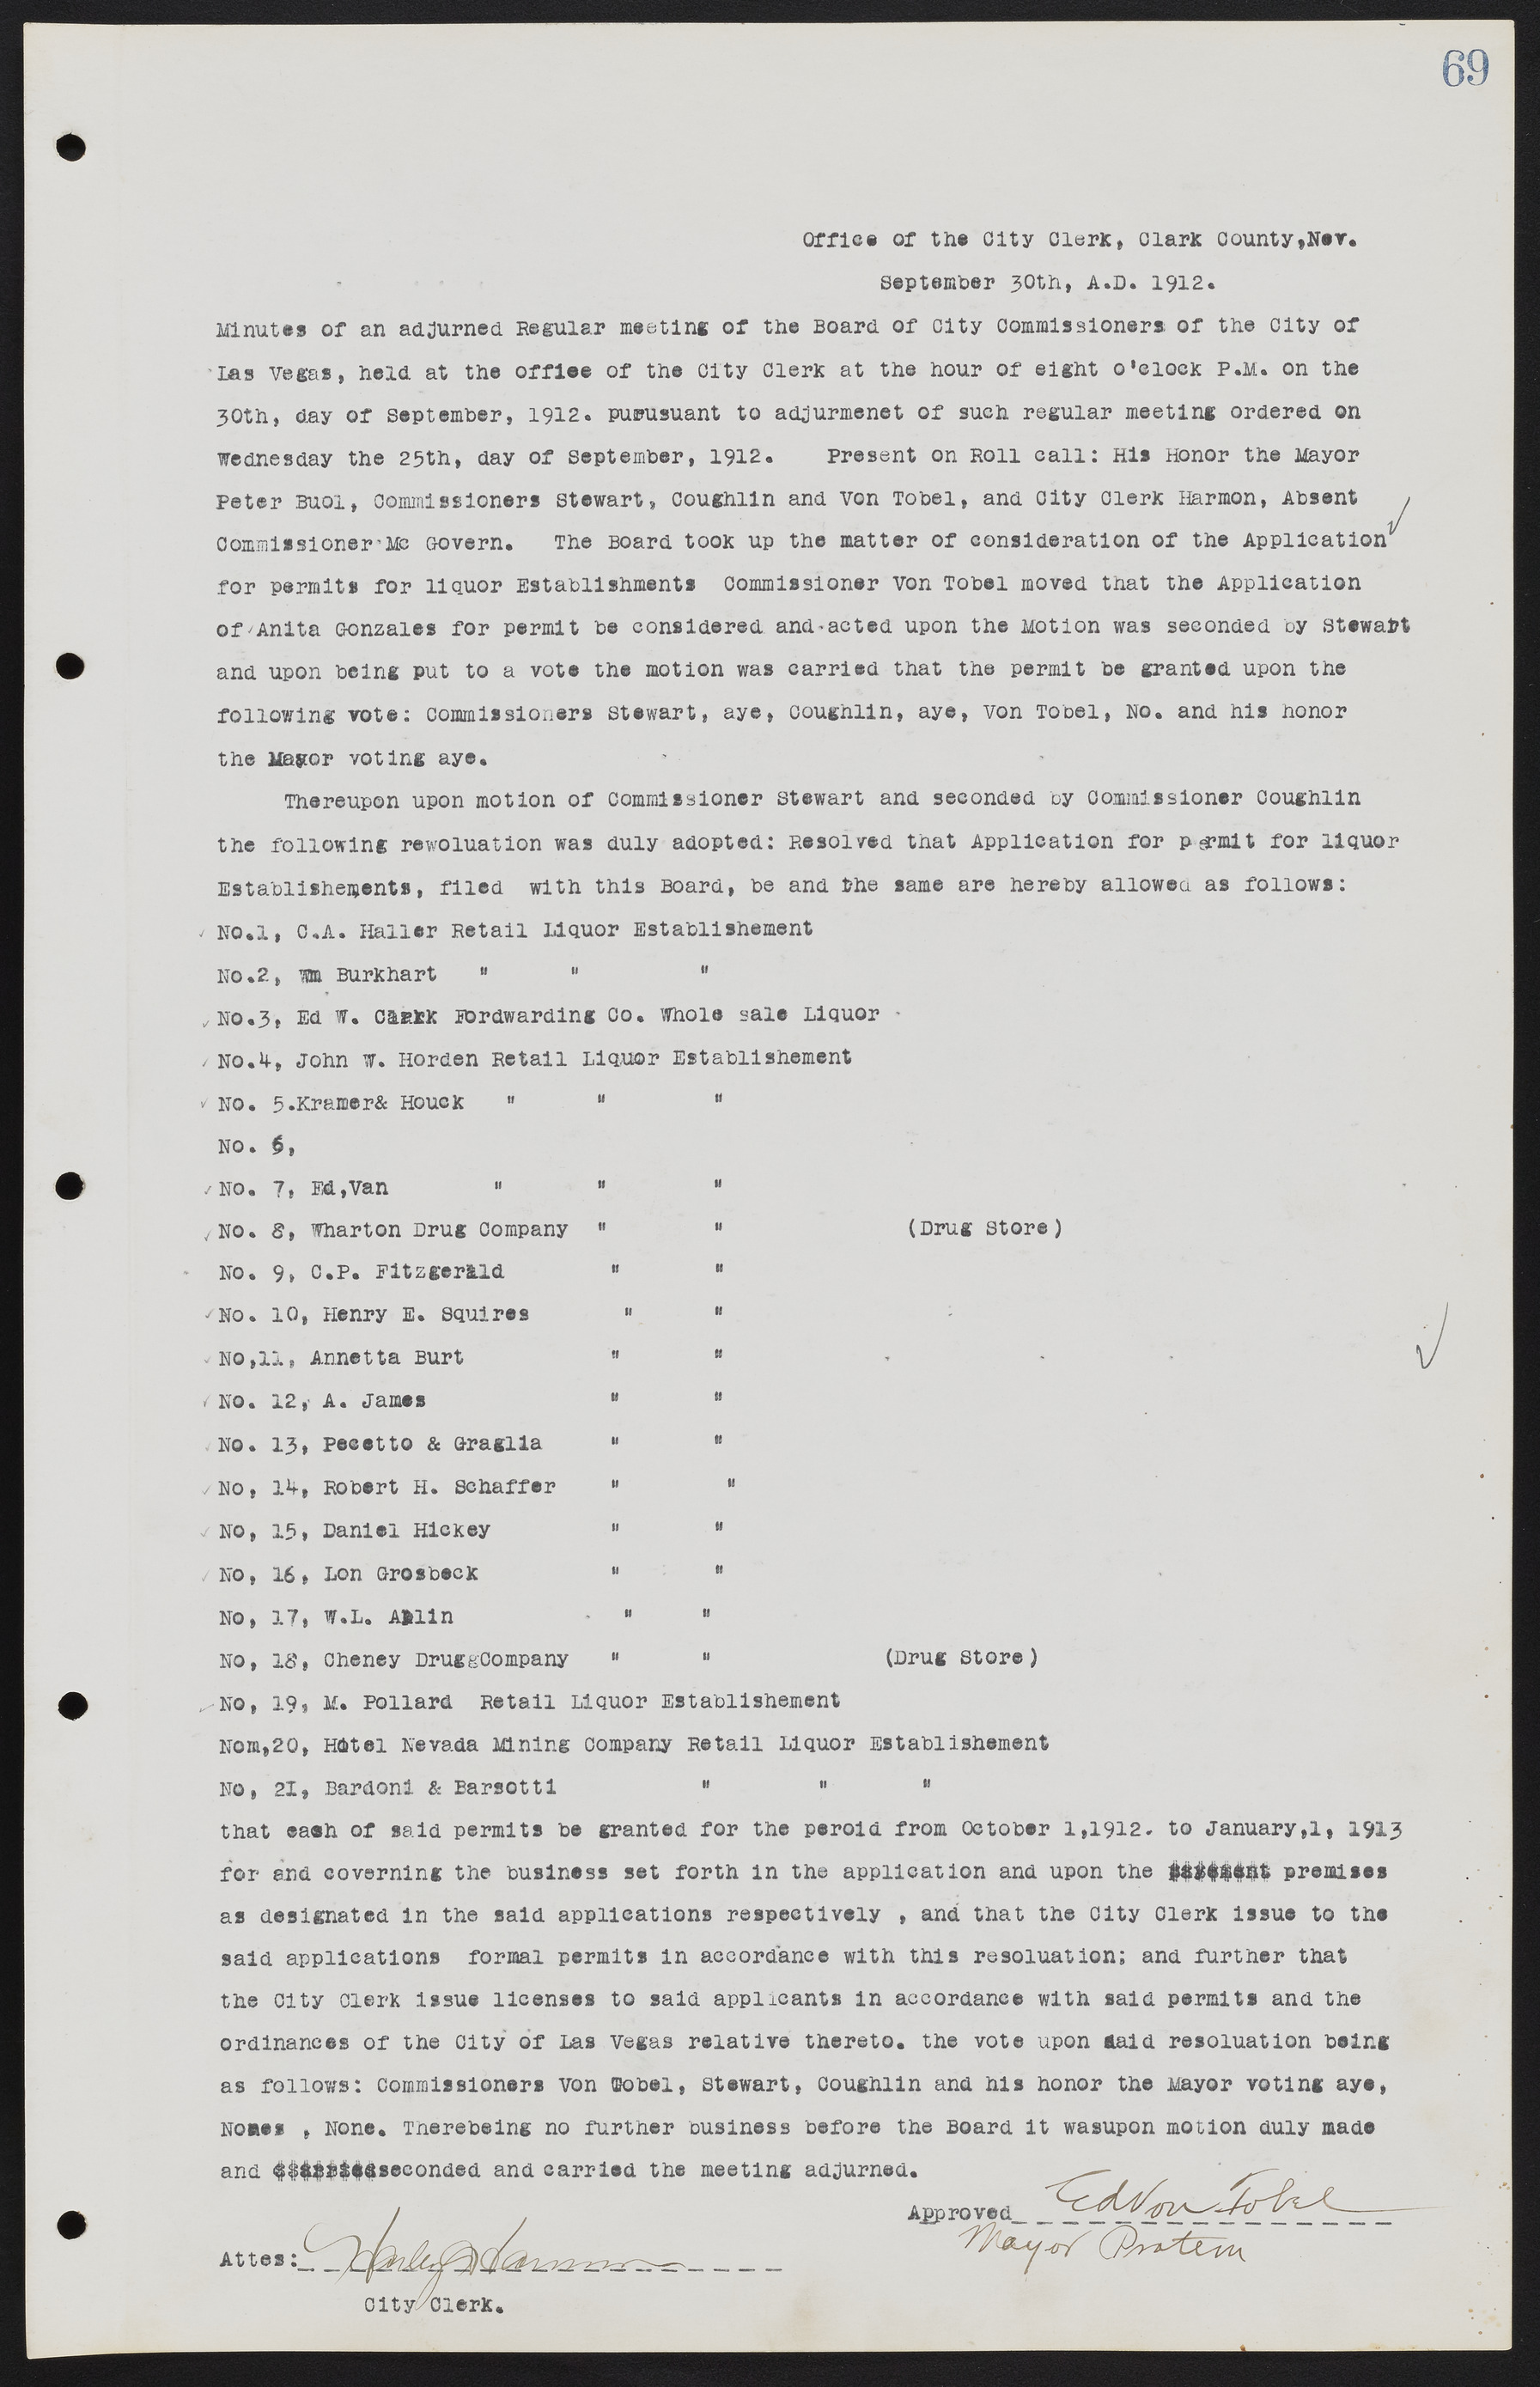 Las Vegas City Commission Minutes, June 22, 1911 to February 7, 1922, lvc000001-83